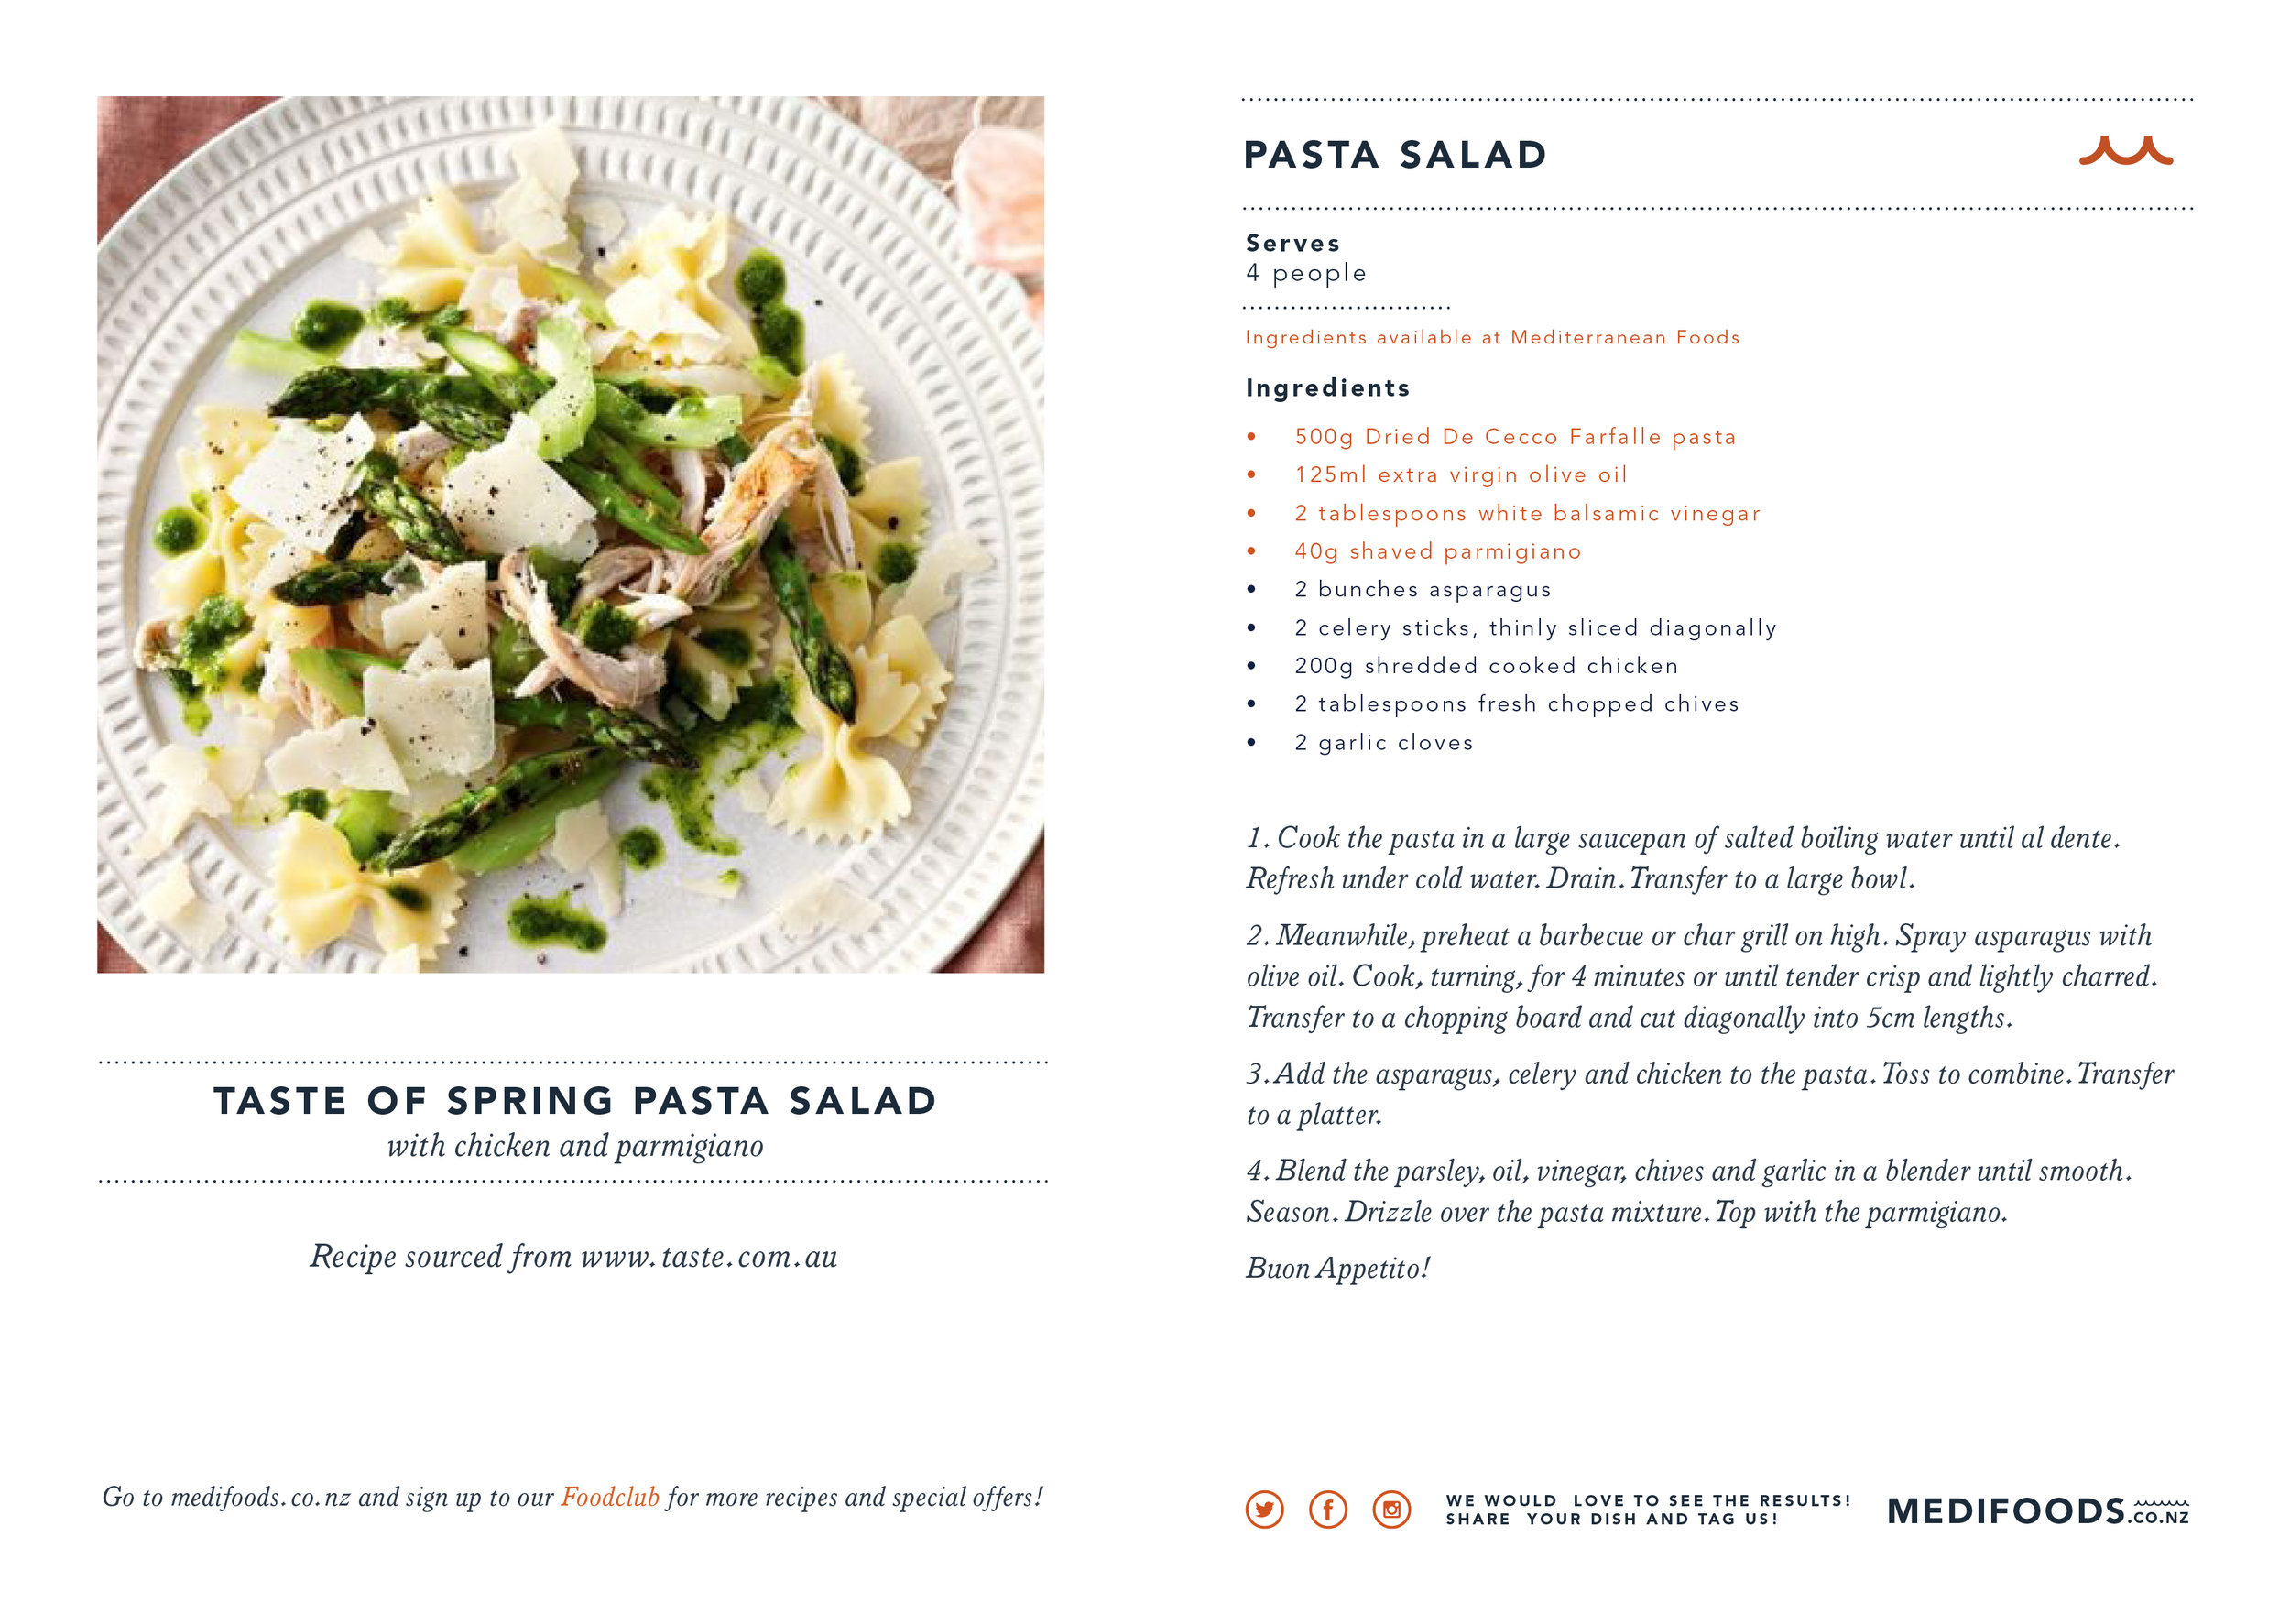 Taste of spring pasta salad.jpg